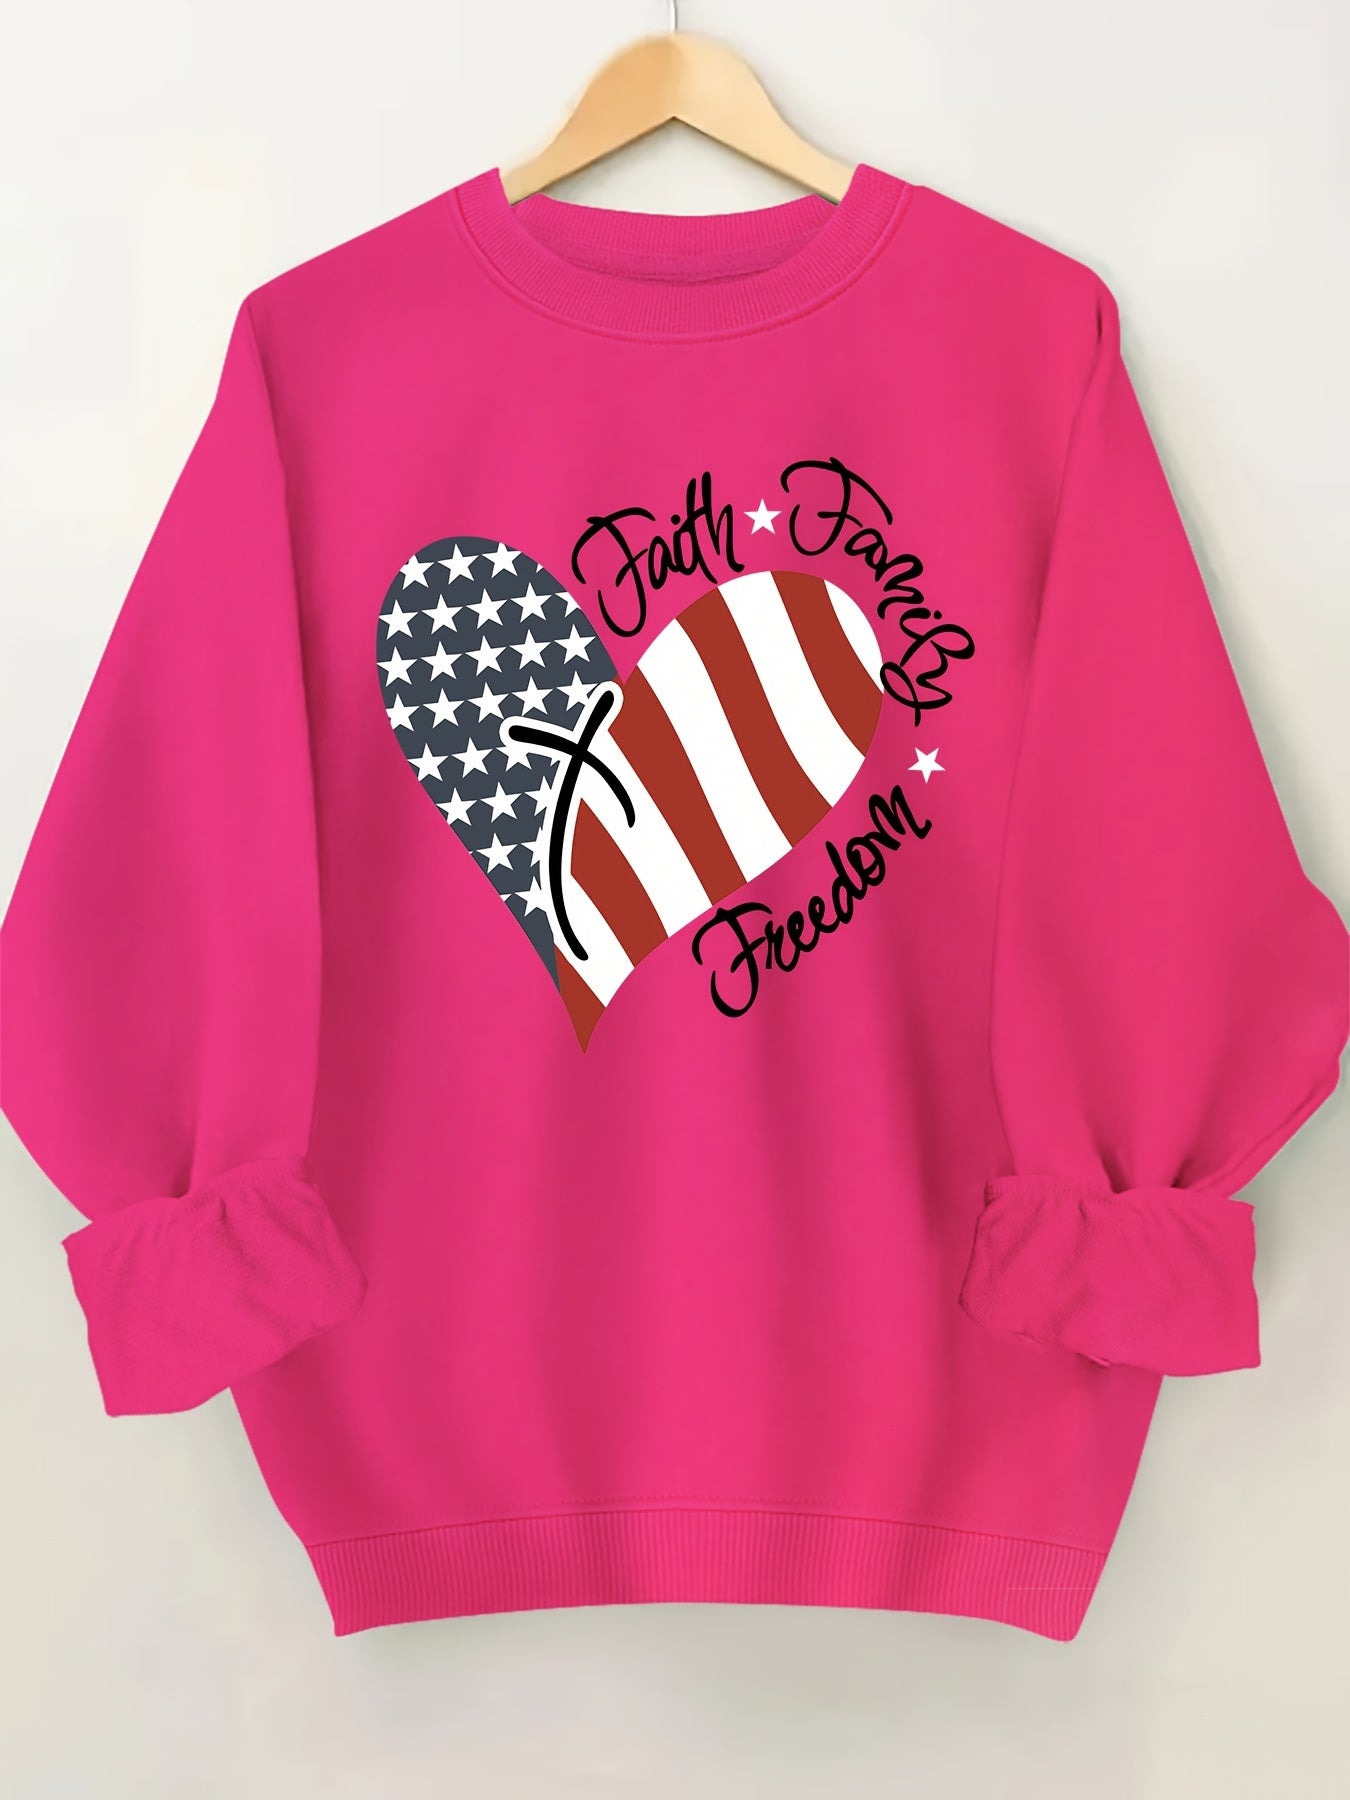 Faith Family Freedom (American flag) Plus Size Women's Christian Pullover Sweatshirt claimedbygoddesigns